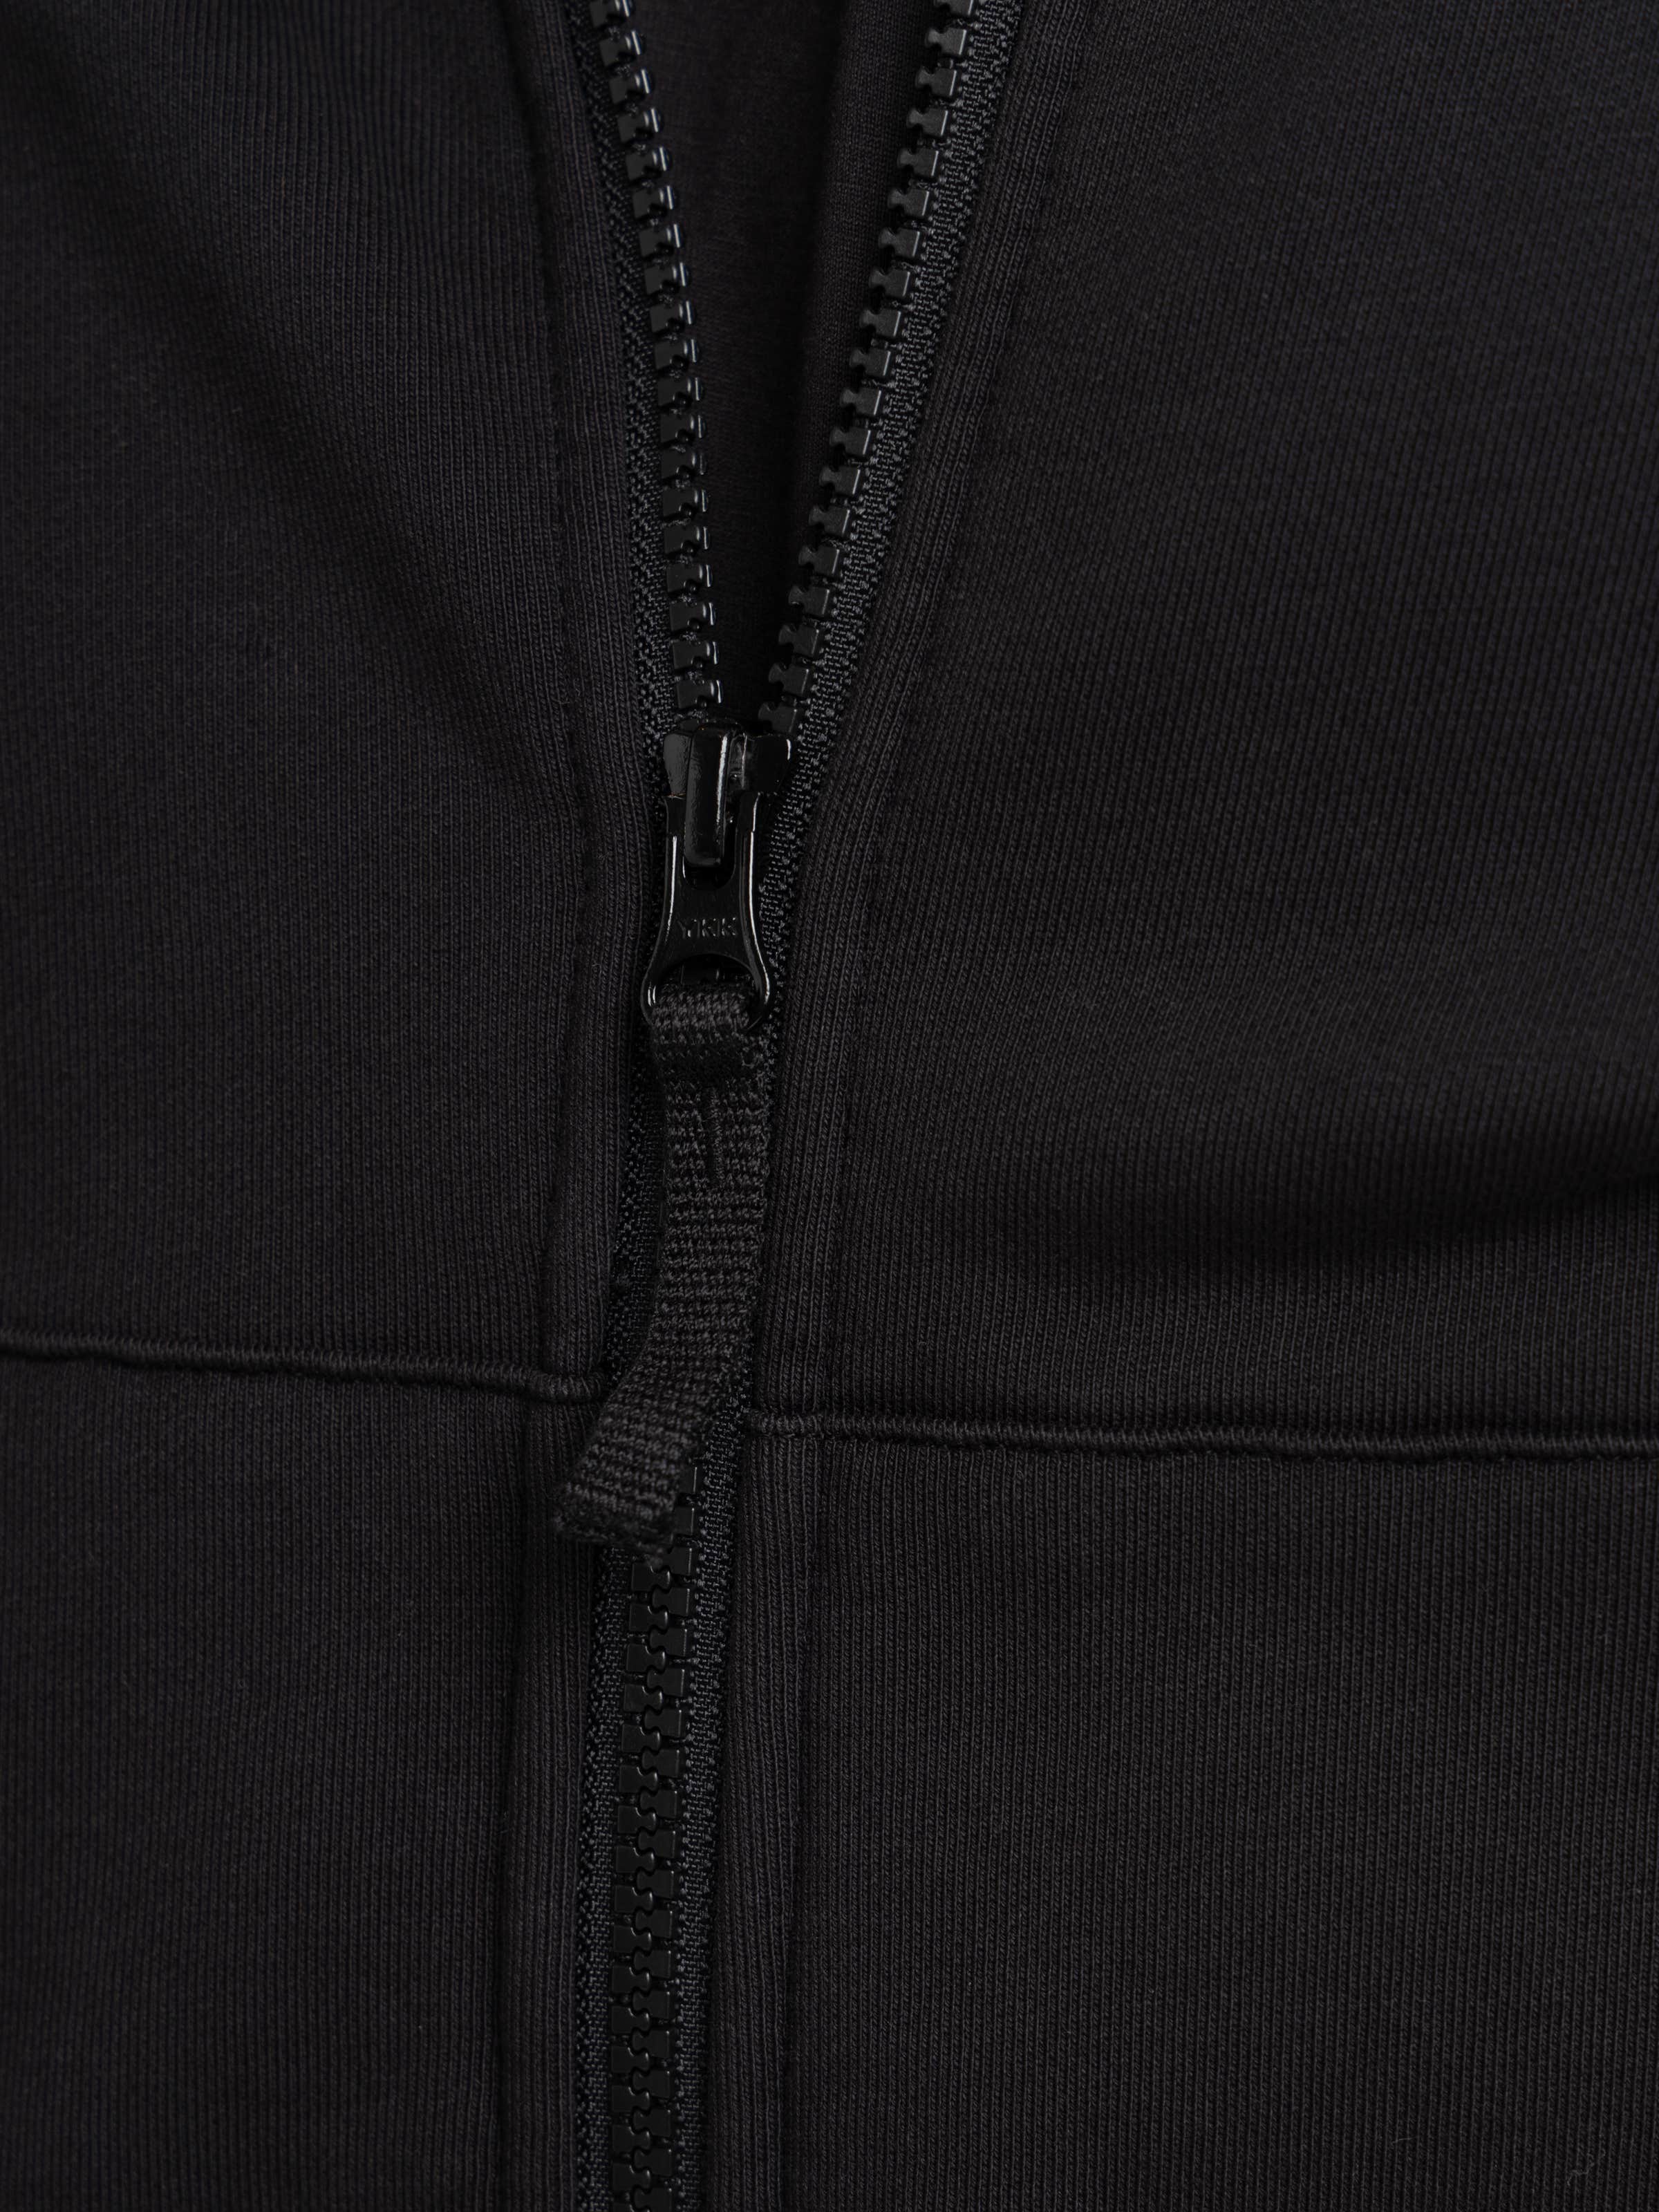 Black Cotton Full Zip Hooded Sweater